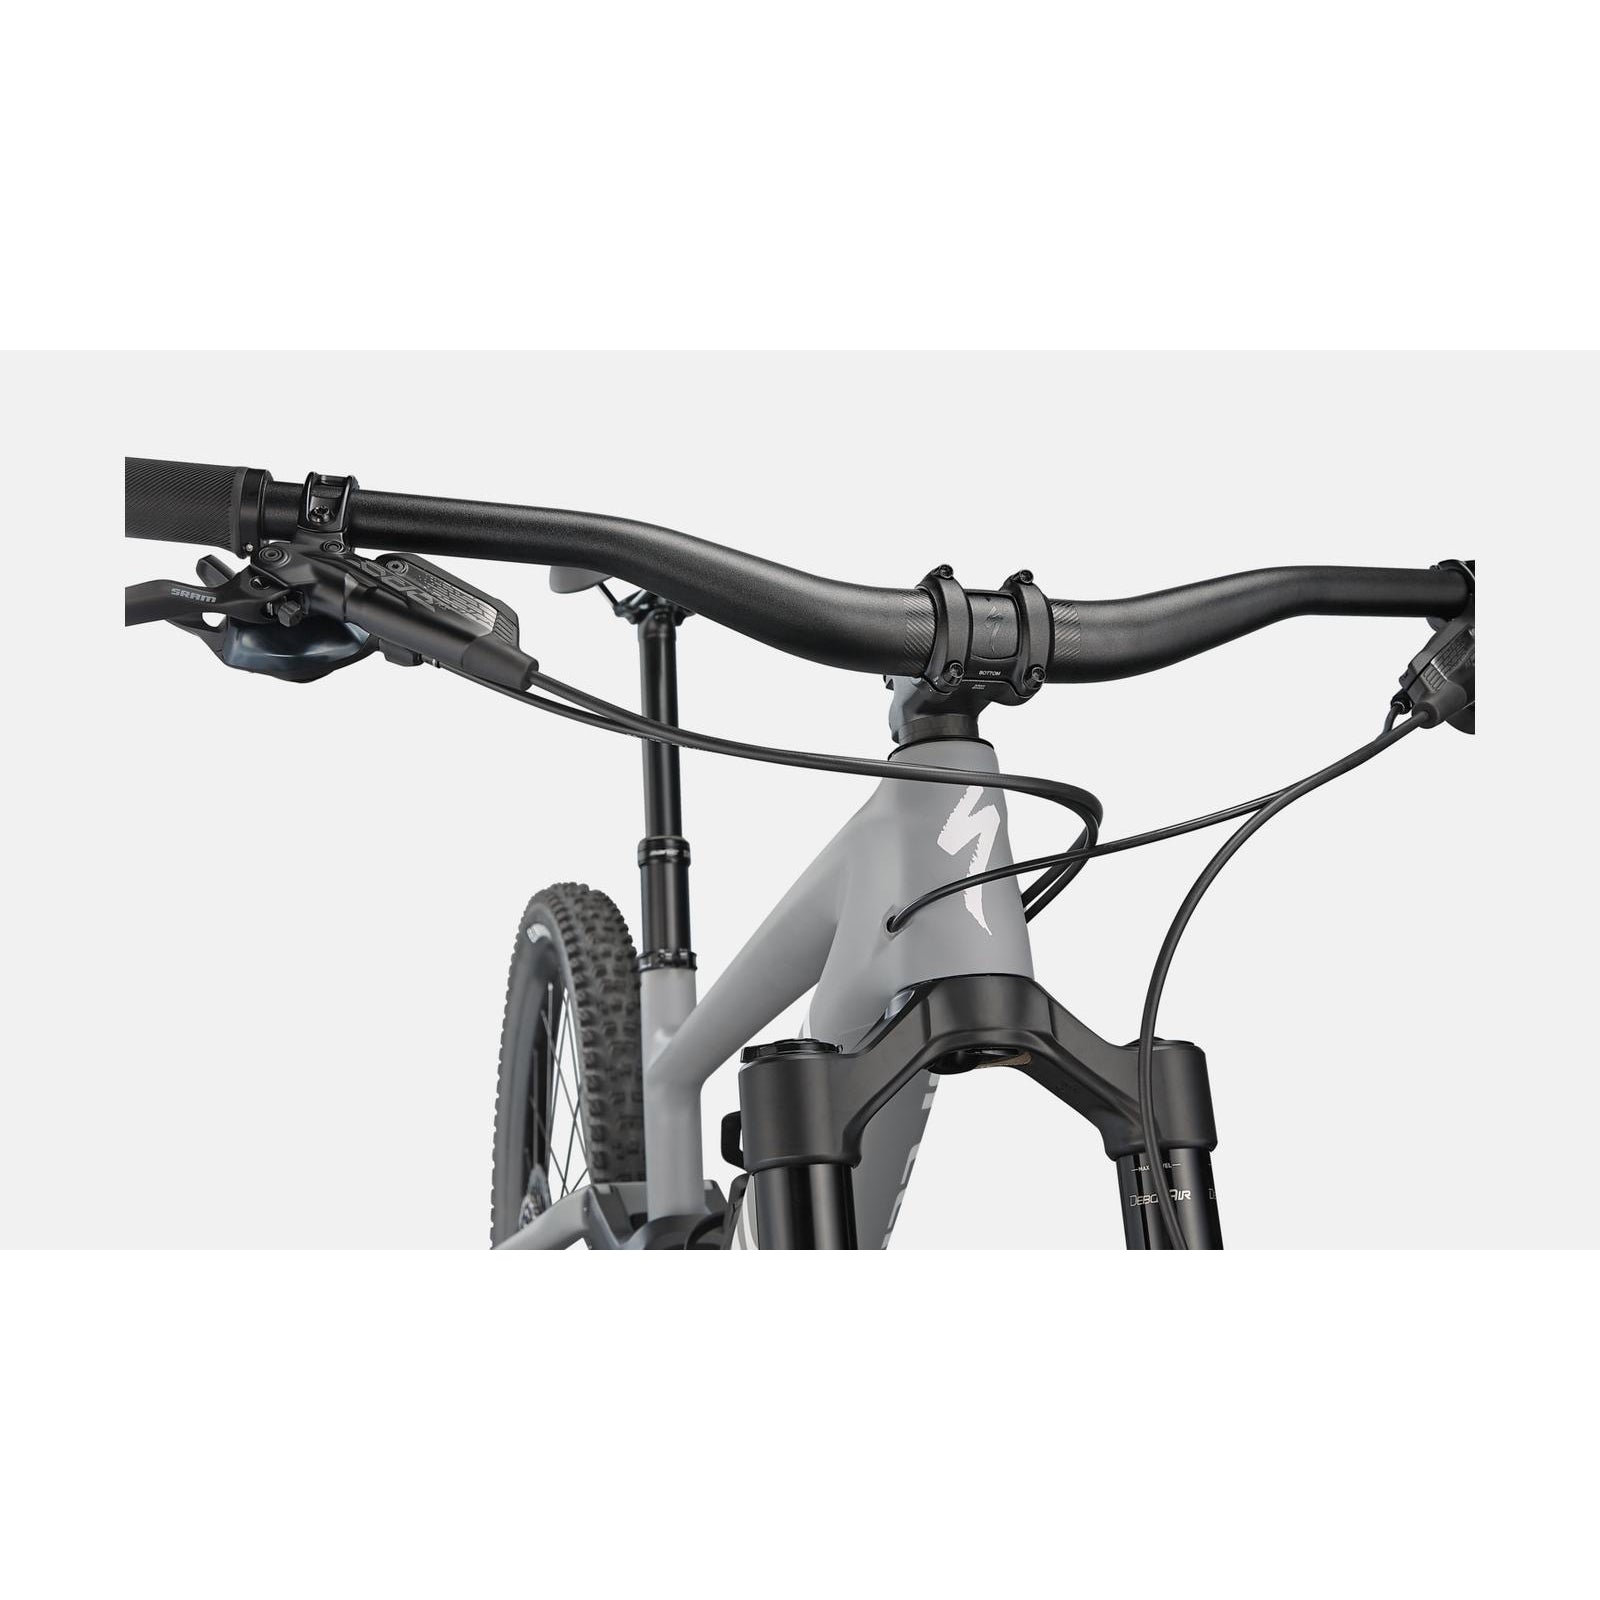 Specialized Enduro Comp Full Suspension 29" Mountain Bike - Bikes - Bicycle Warehouse